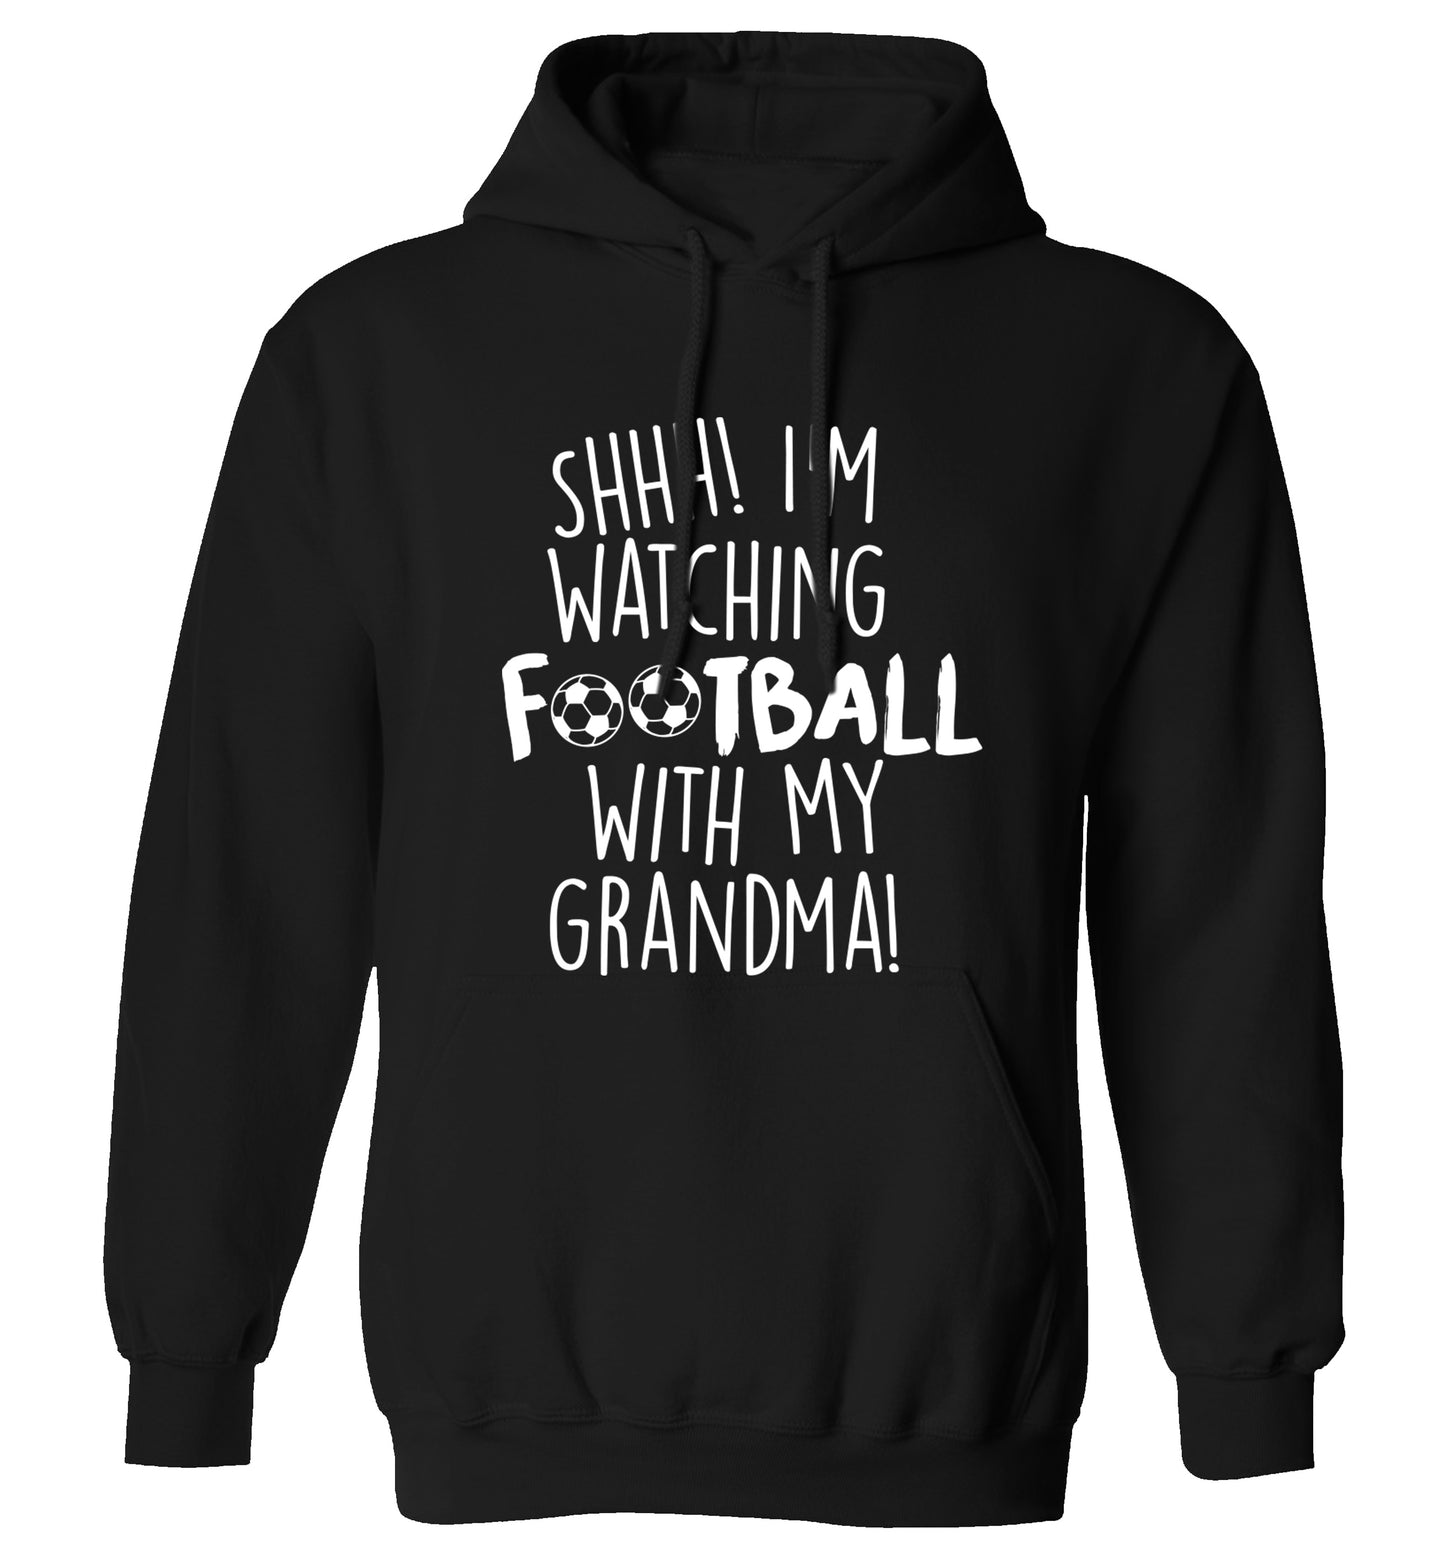 Shhh I'm watching football with my grandma adults unisexblack hoodie 2XL